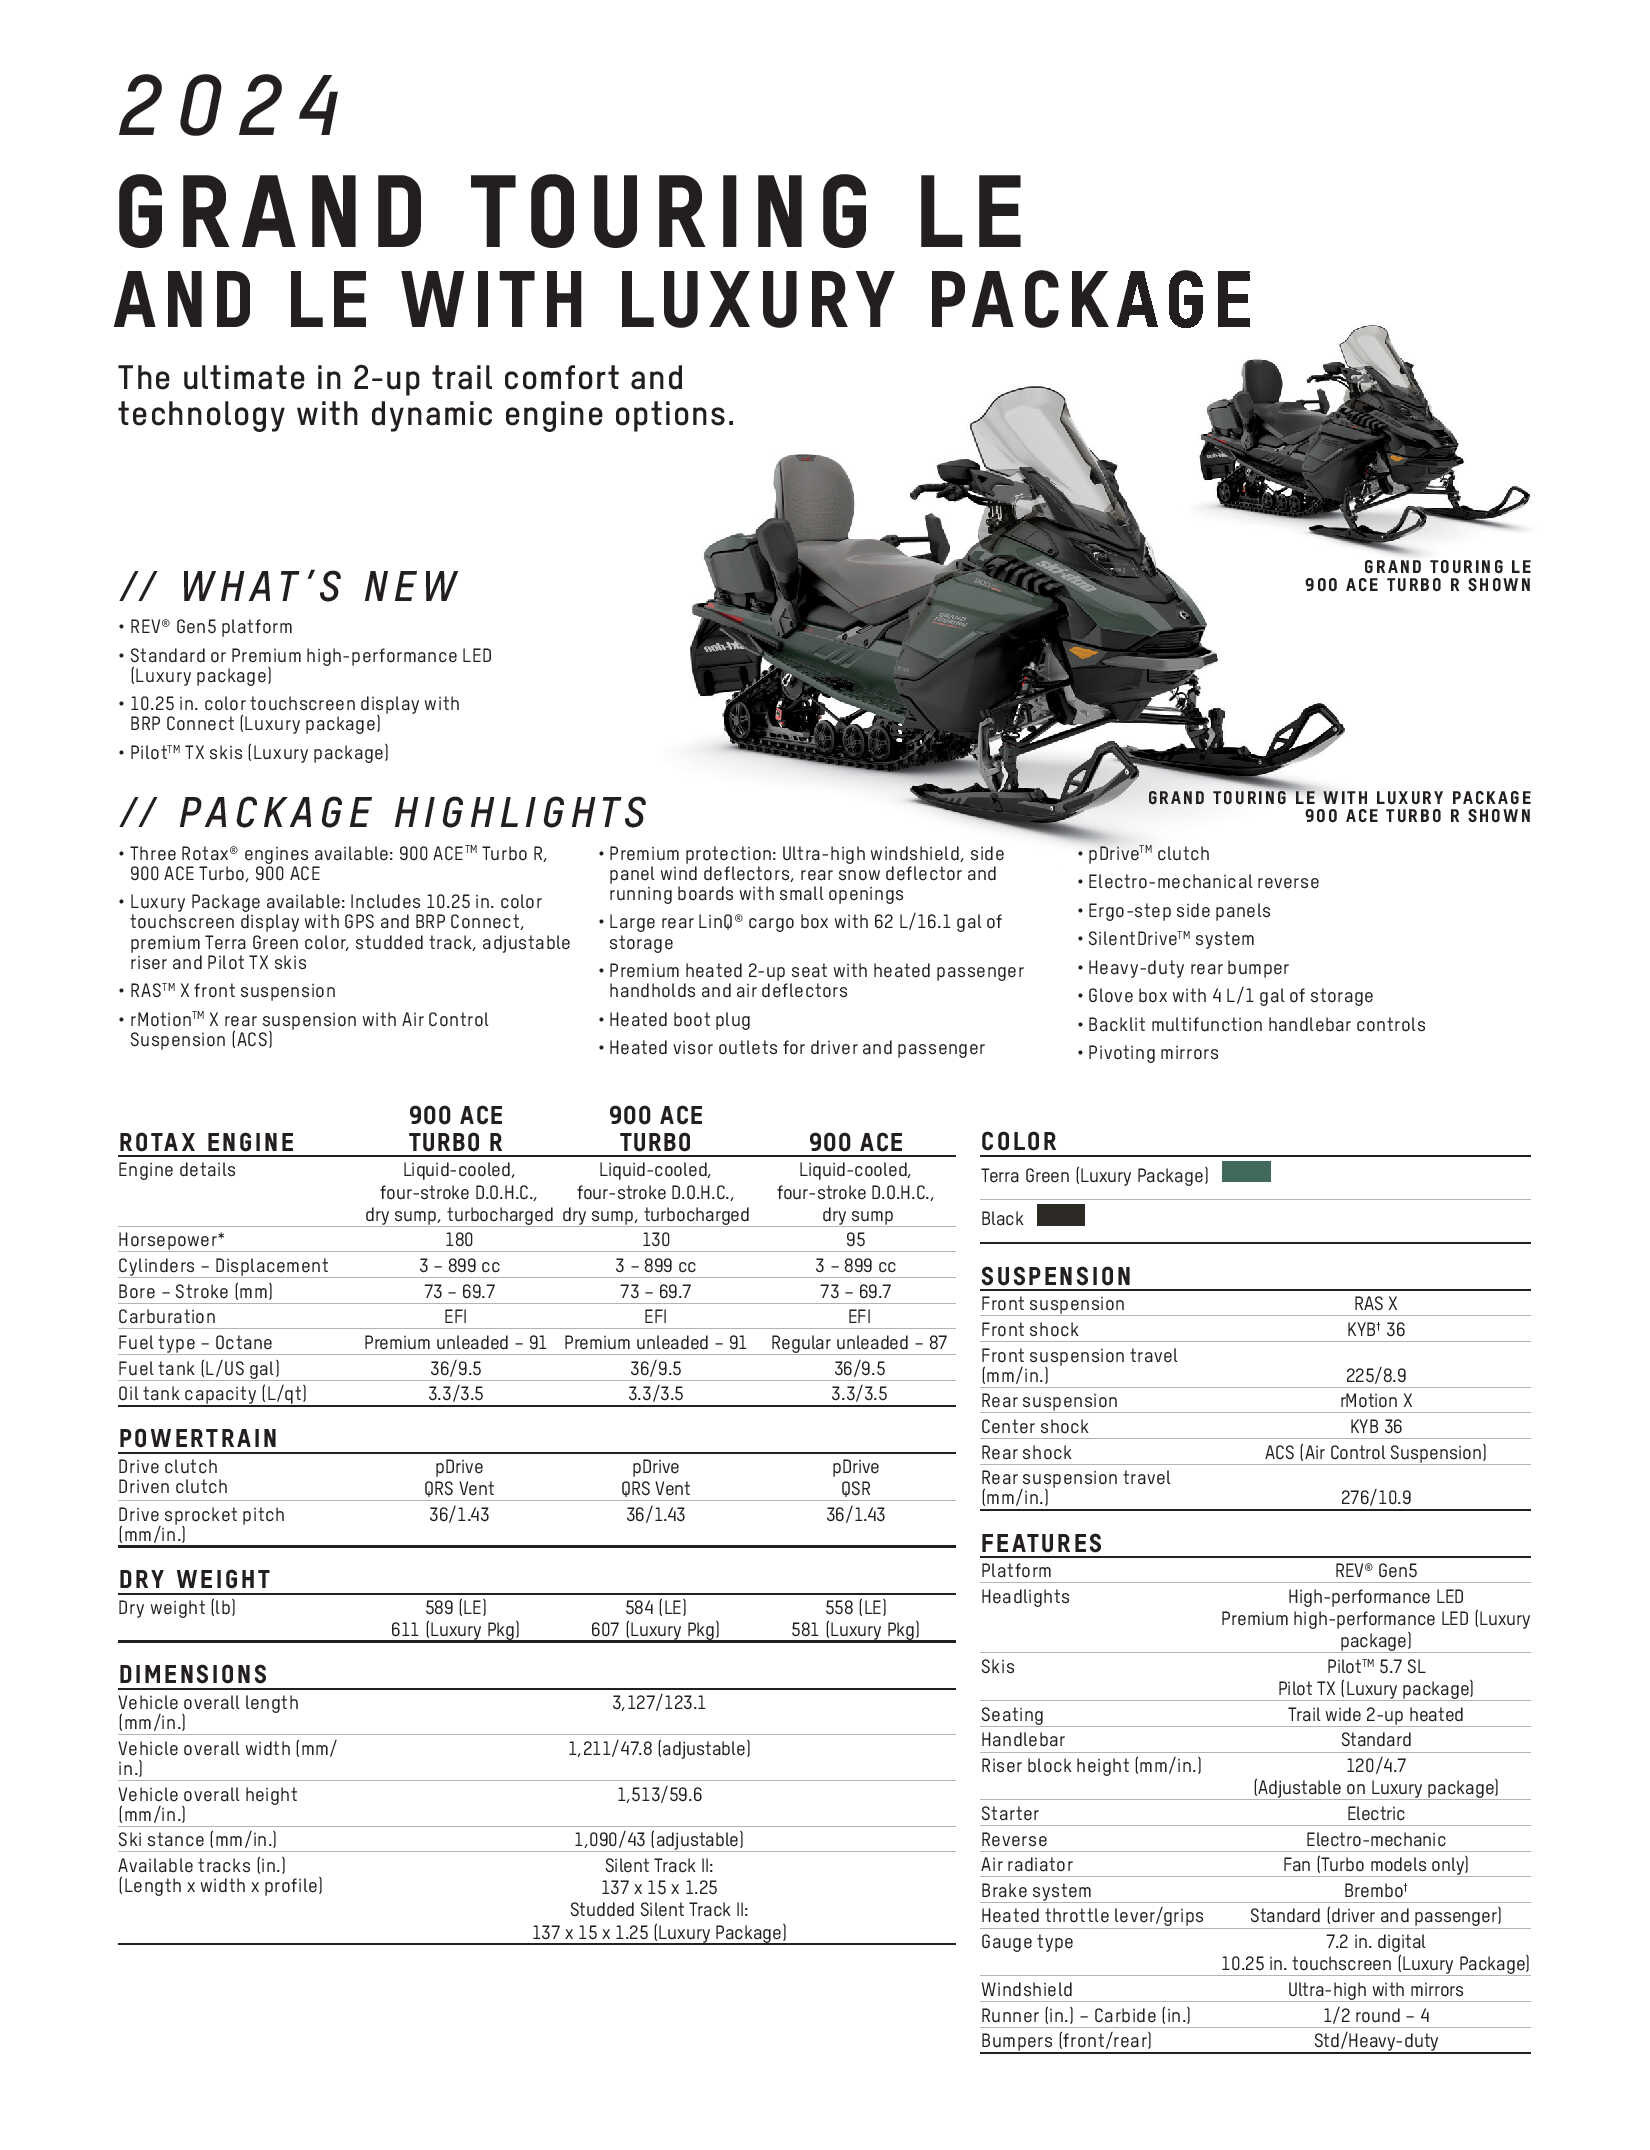 2024 Ski-Doo Grand Touring Luxury Package specs